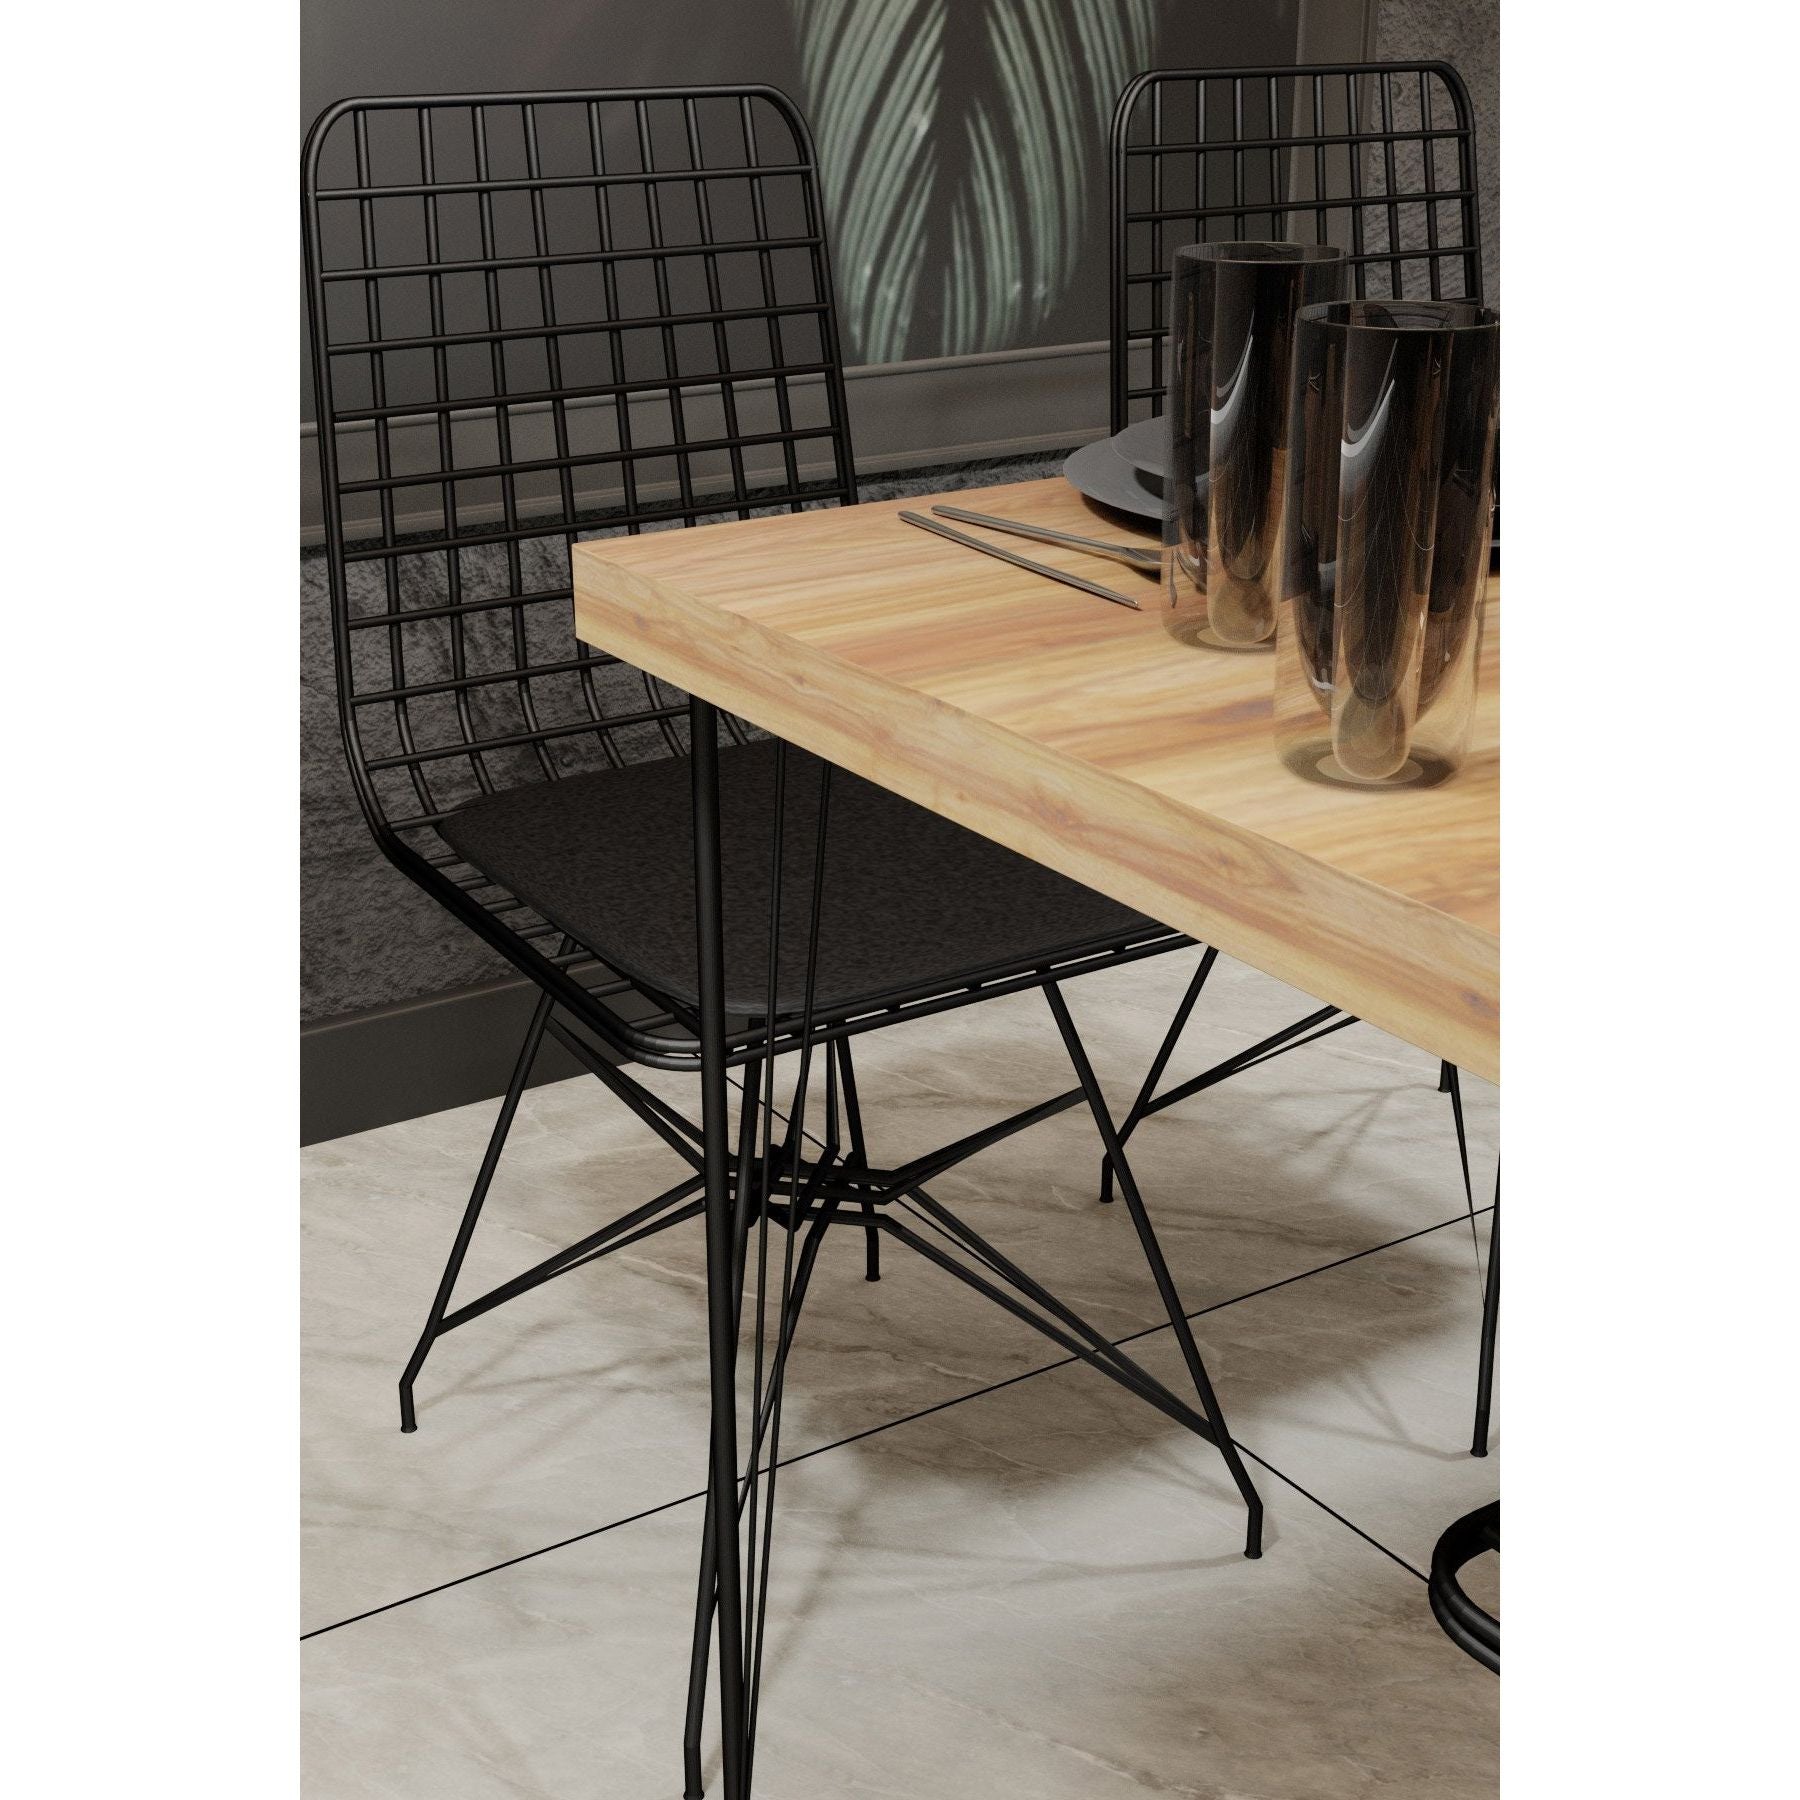 Set masa cu 4 scaune Nmsymk001a, stejar/negru, 100% PAL melaminat, 120x75x60 cm